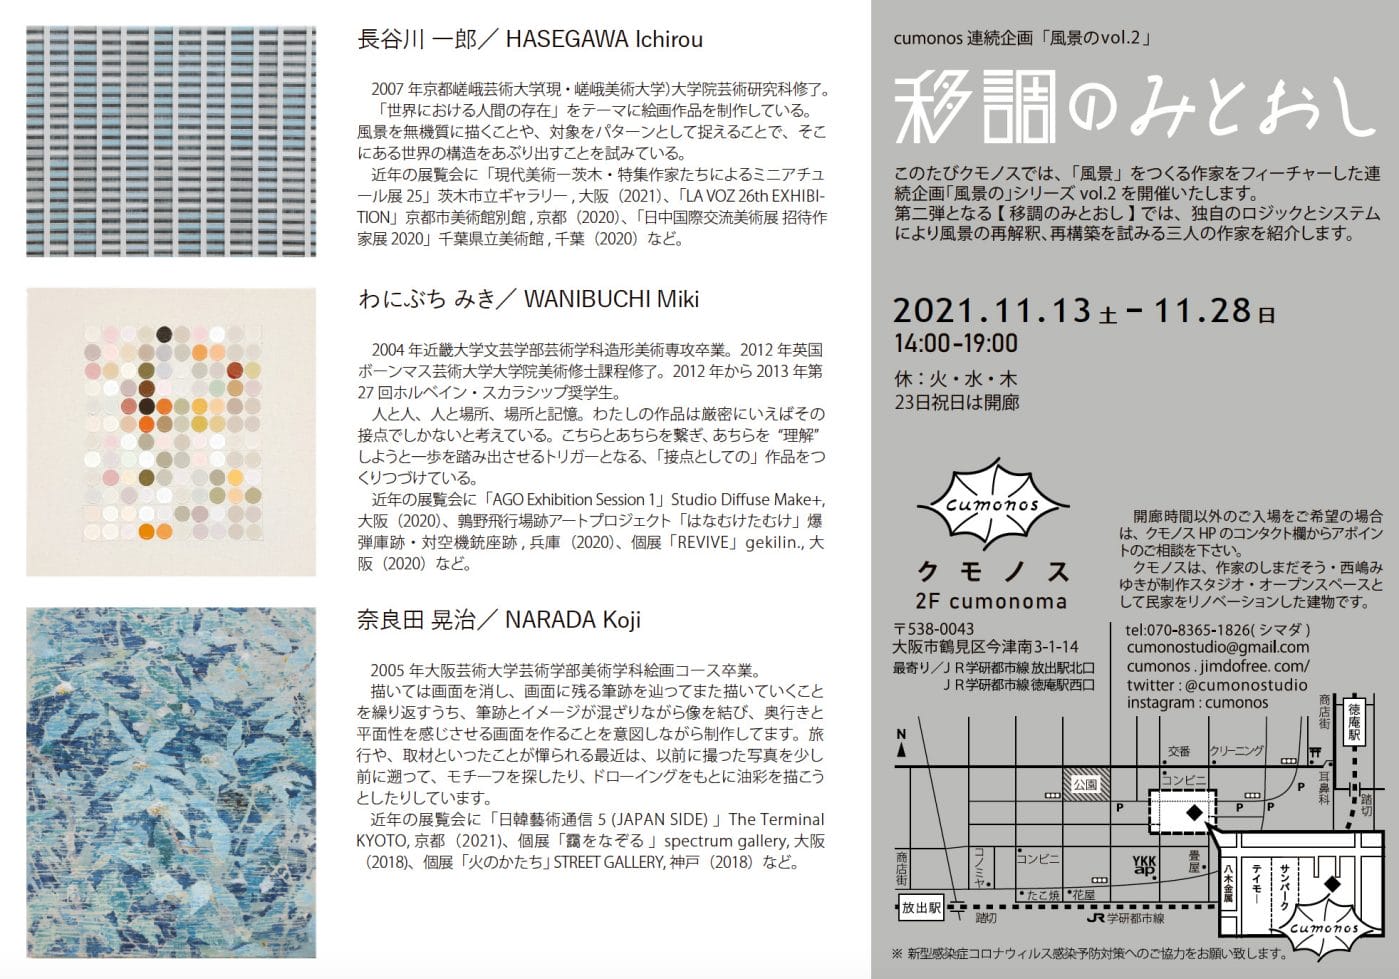 cumonosにて、連続企画「風景の」シリーズ第2弾となる展覧会「移調のみとおし」開催。長谷川一郎、わにぶちみき、奈良田晃治の作品を紹介。